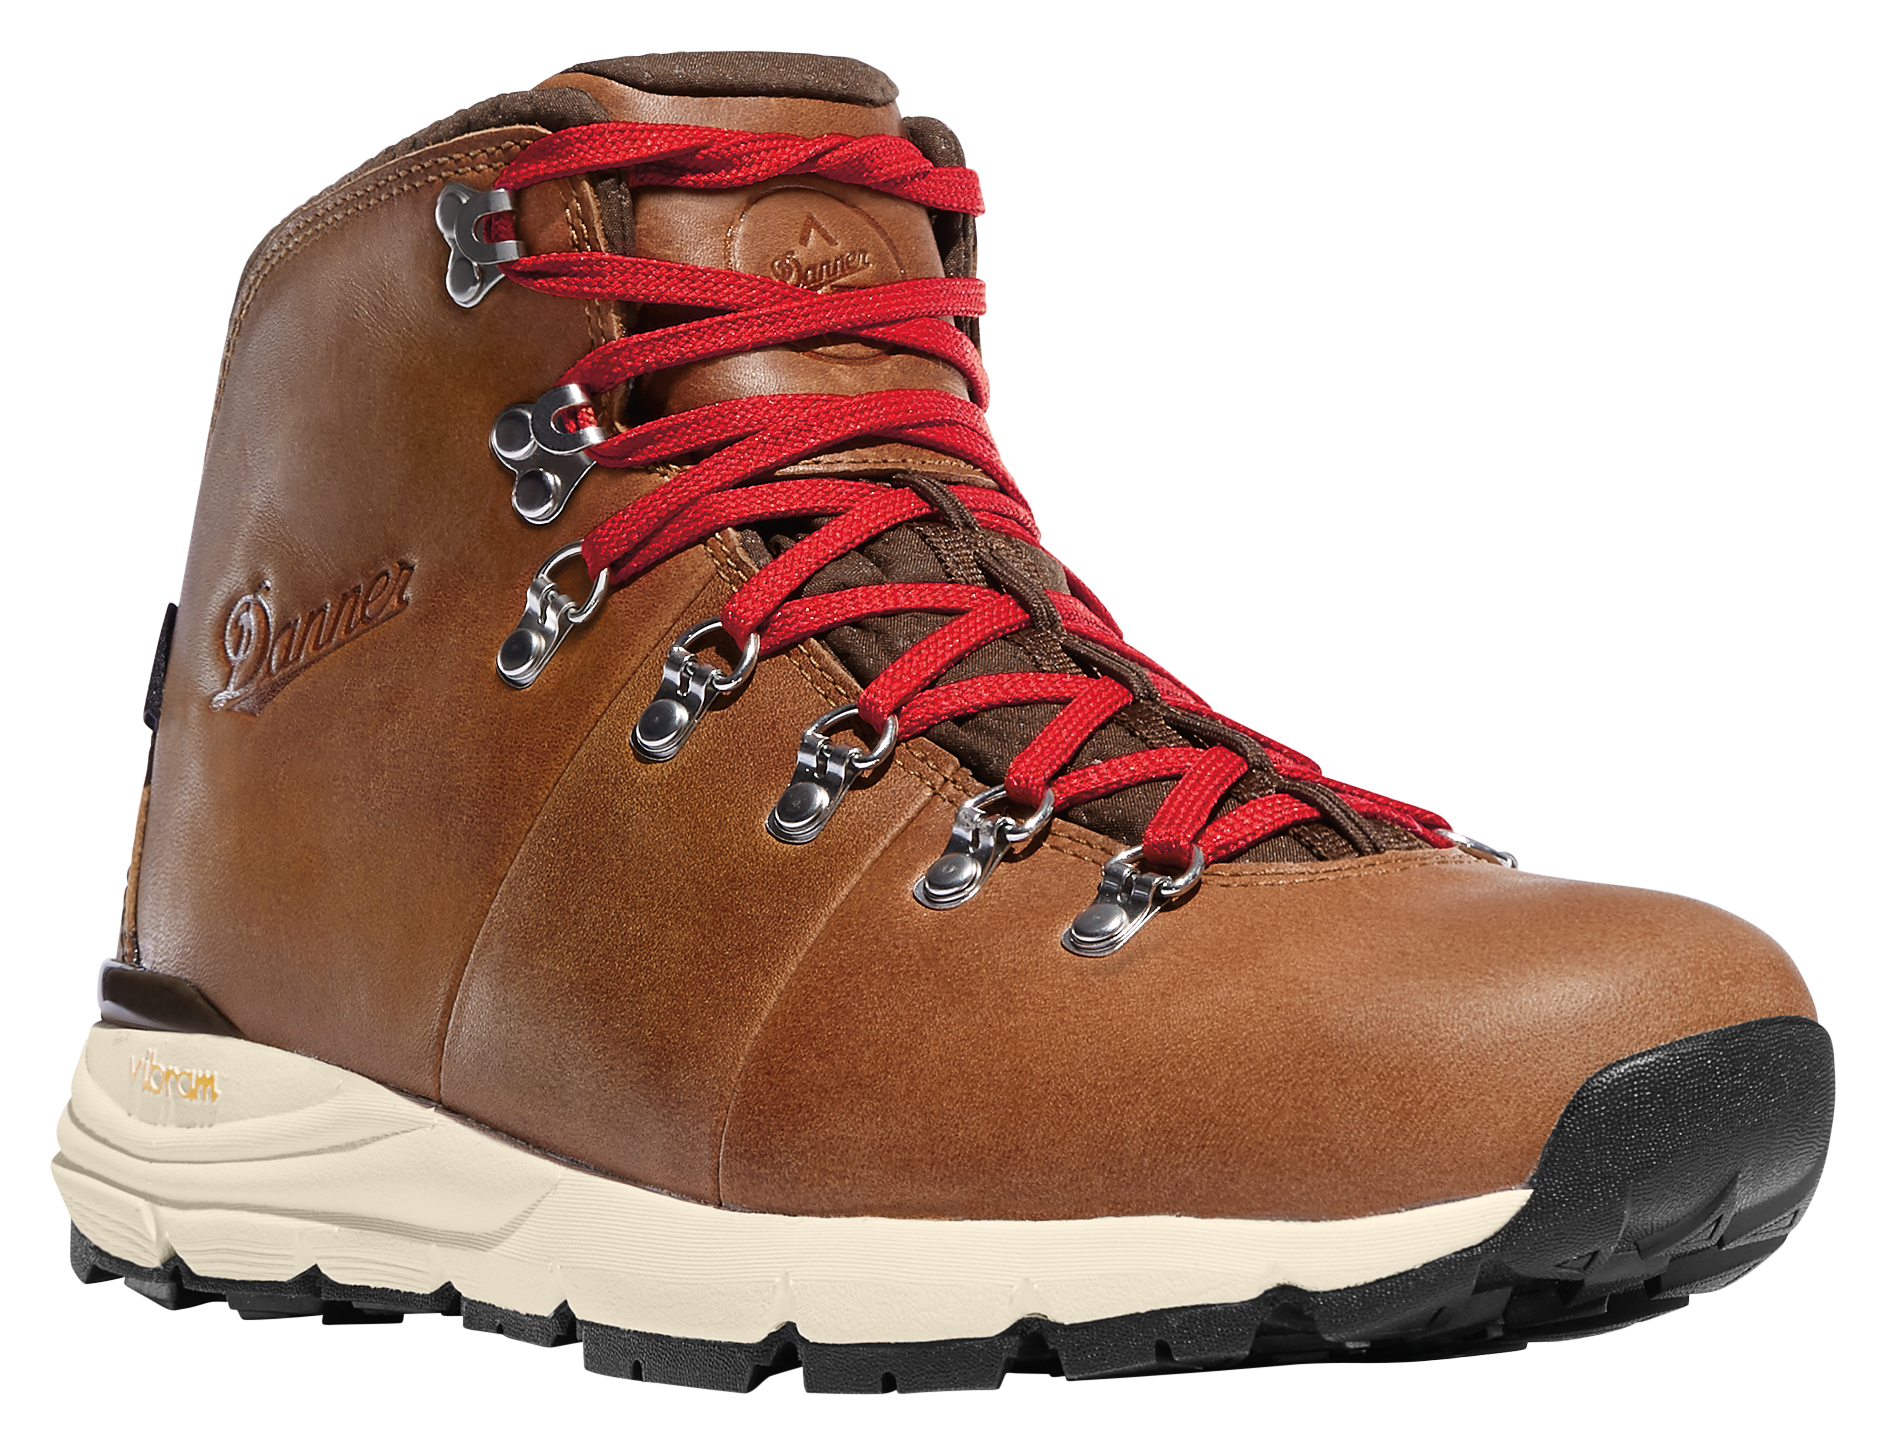 Danner Mountain 600 Waterproof Hiking Boots for Men - Saddle Tan - 9M